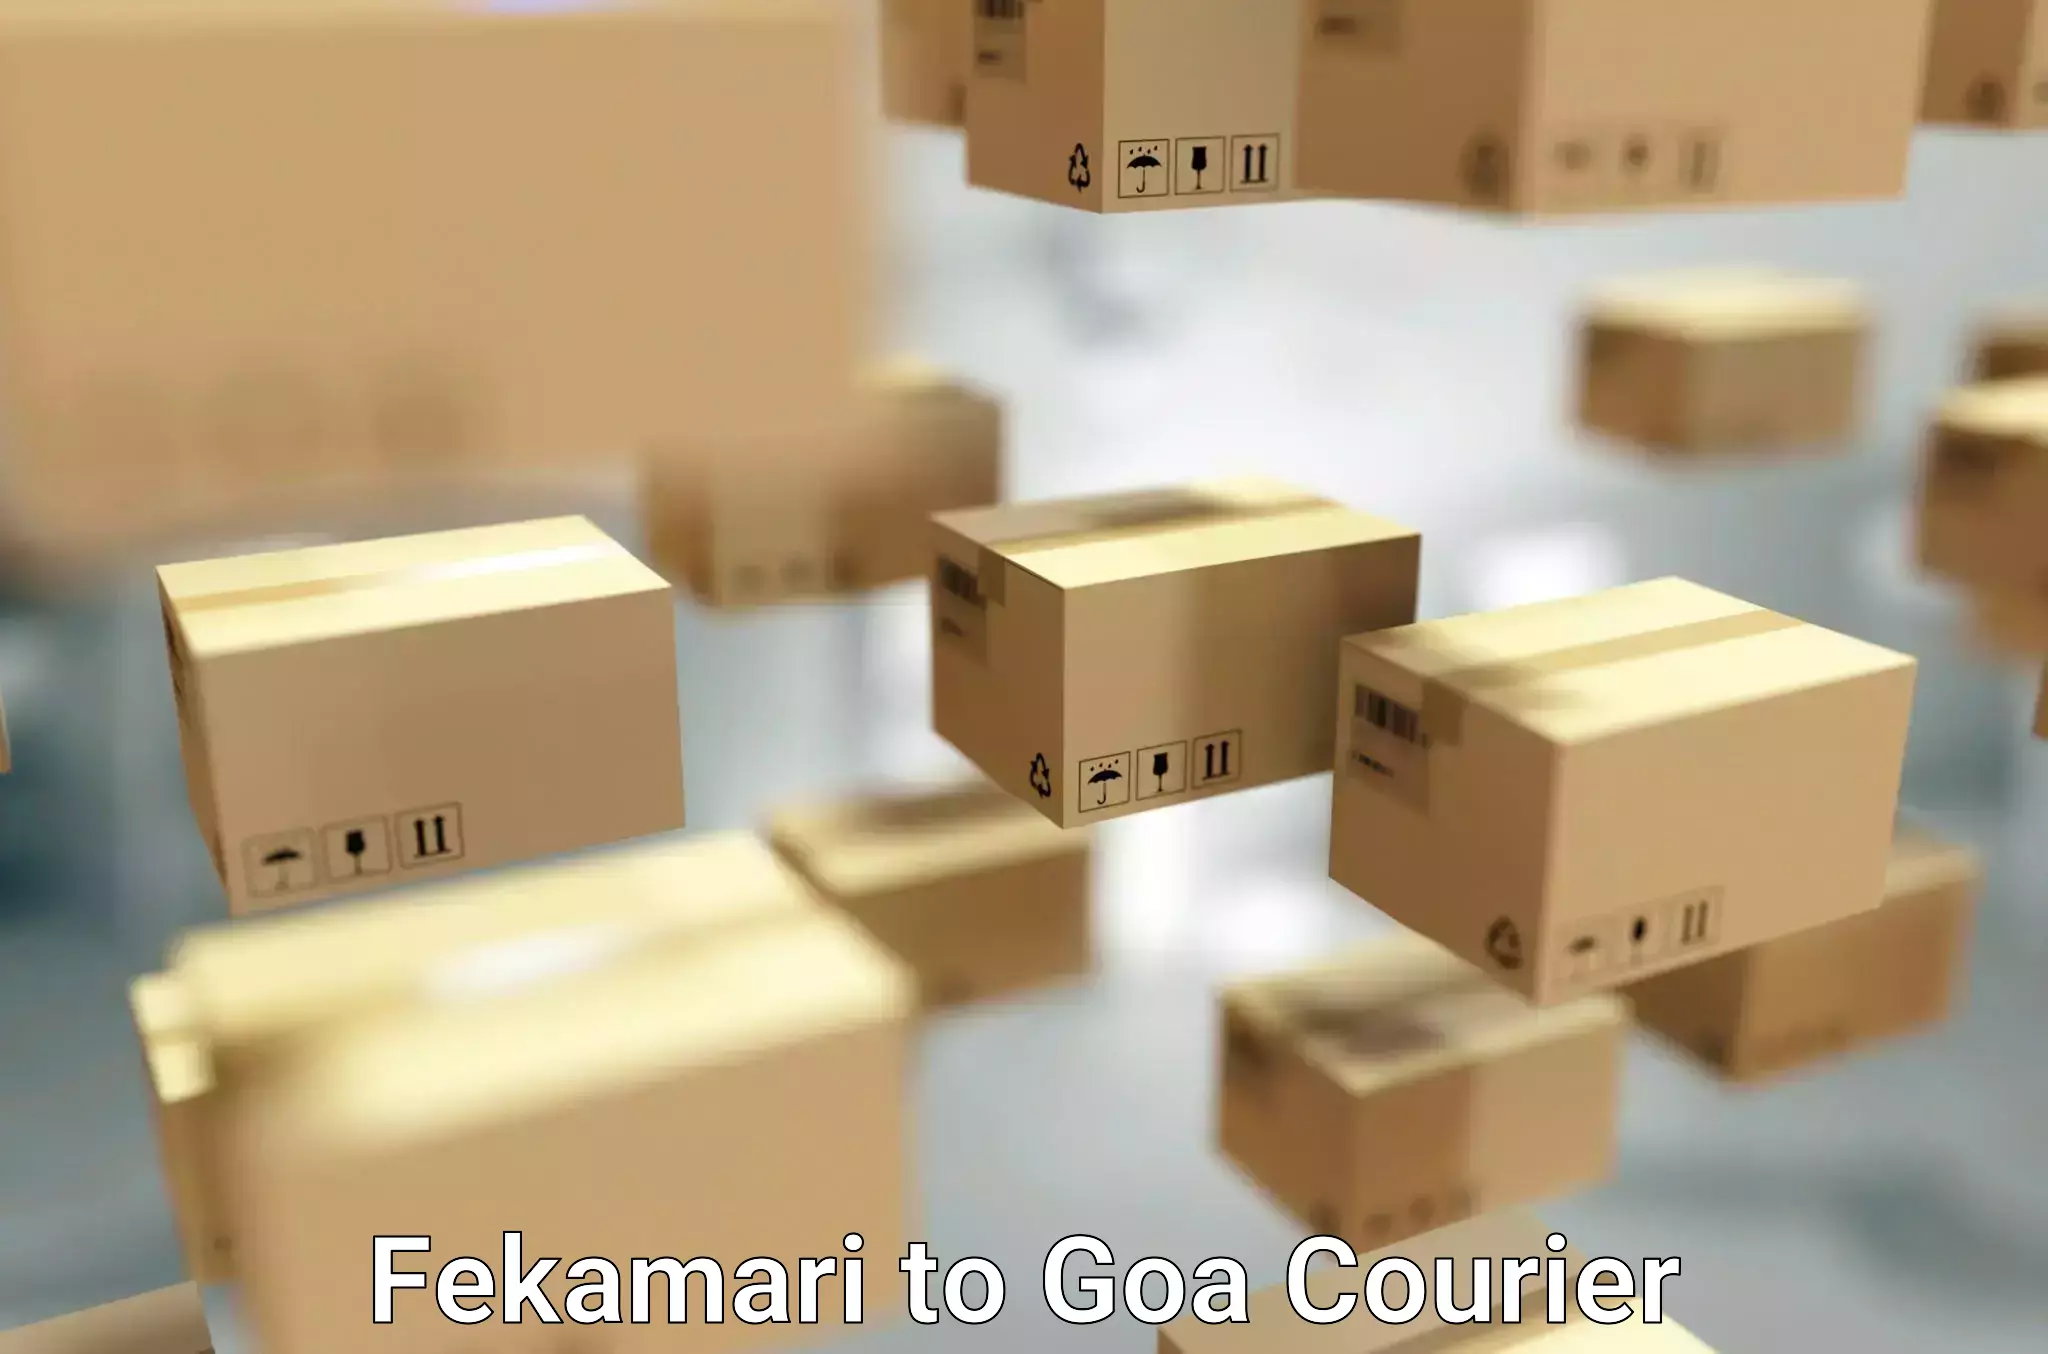 Furniture transport company Fekamari to Goa